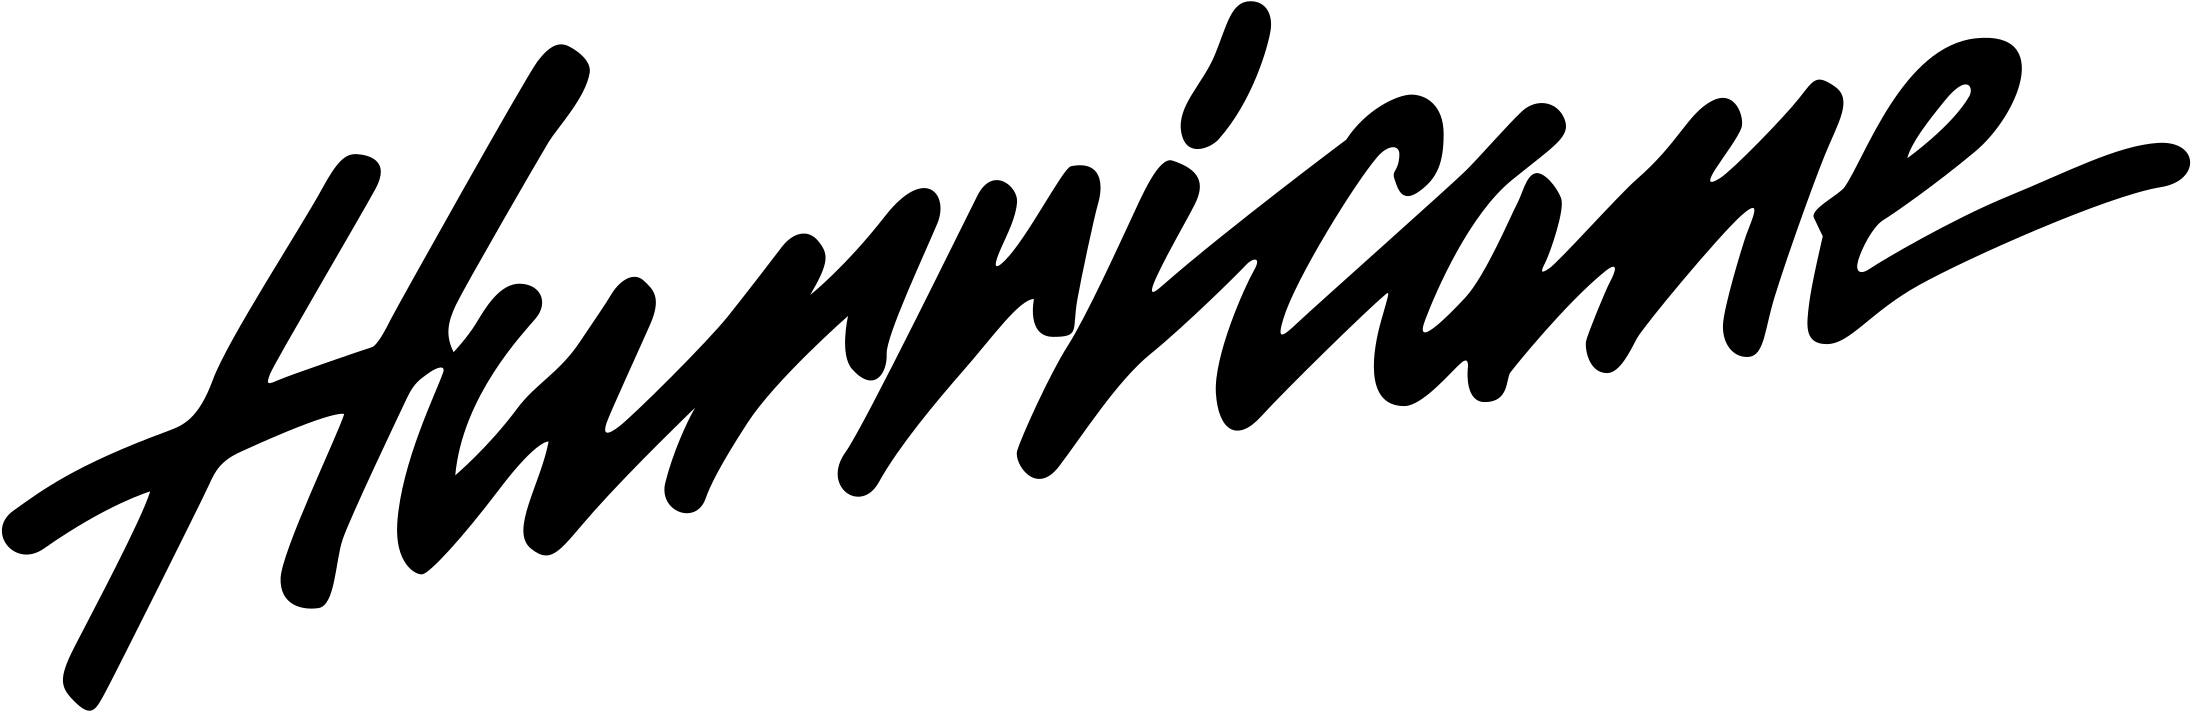 Hurricane Logo Png Transparent - Hurricane Vector Clipart (2400x2400), Png Download